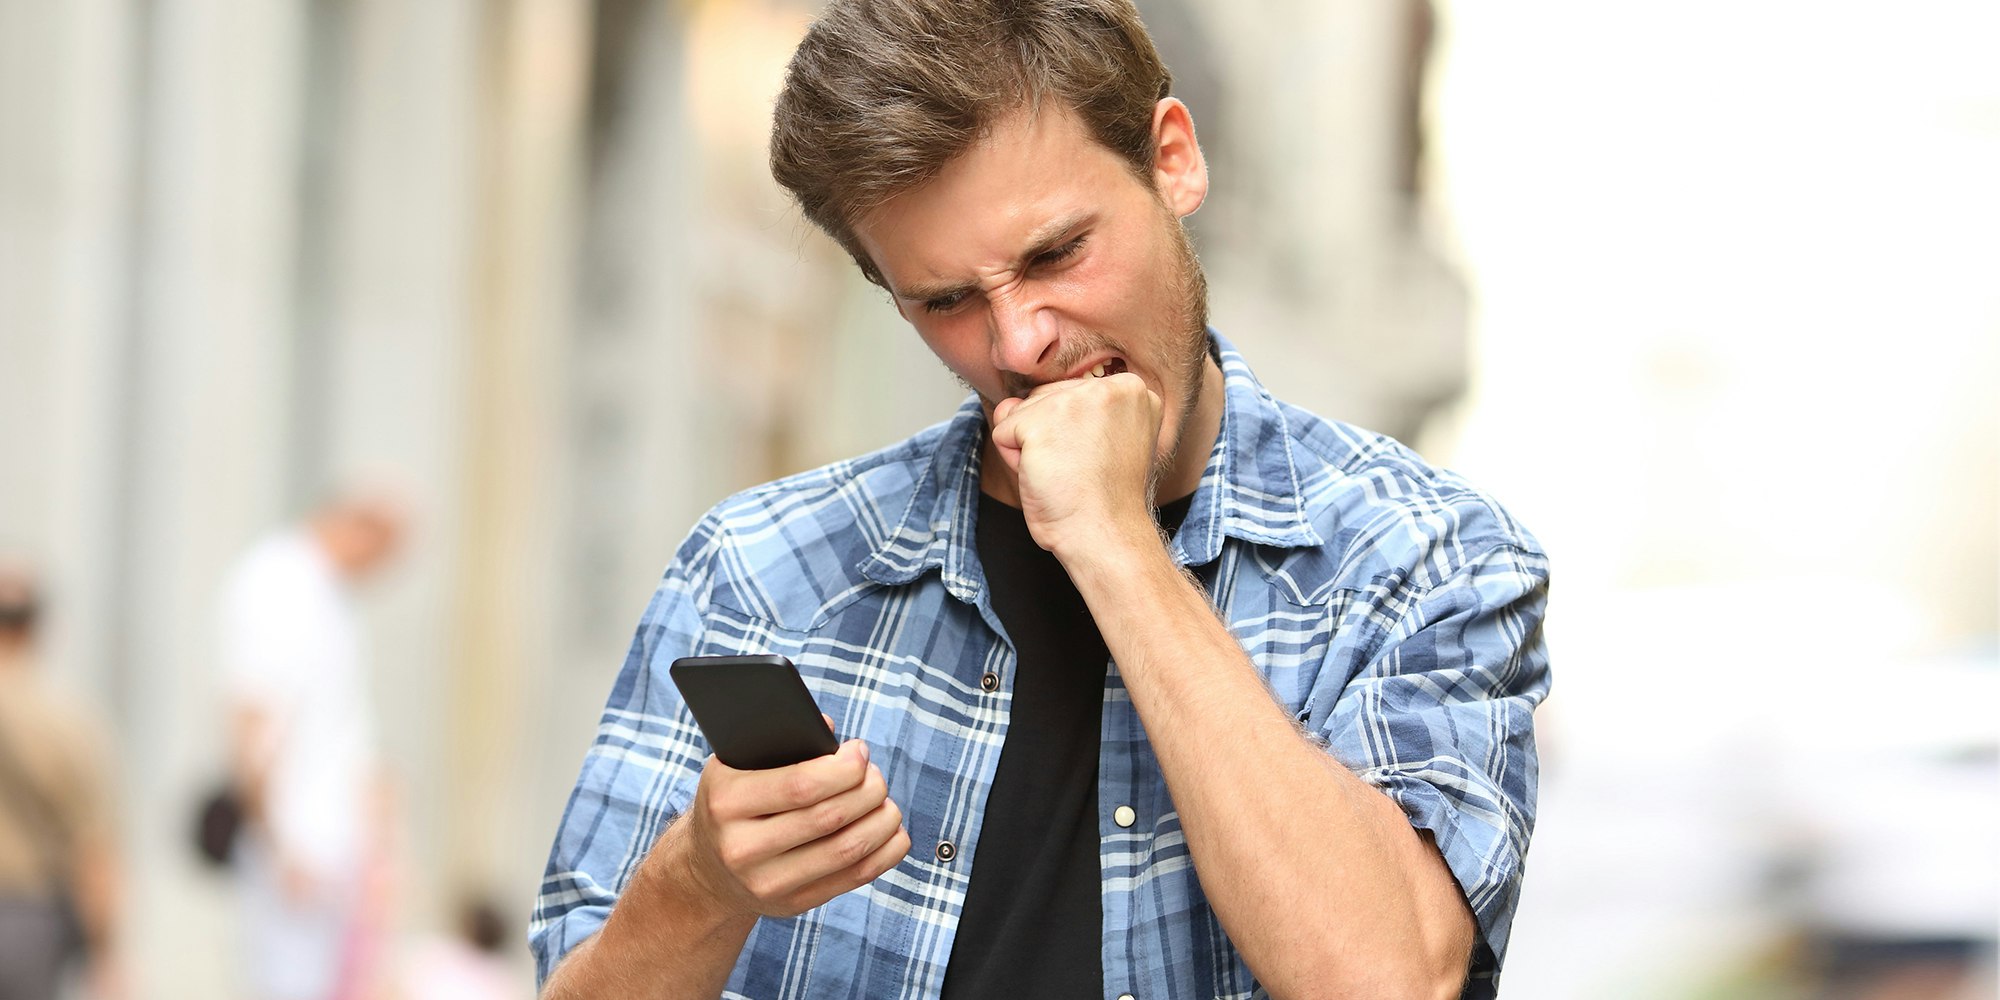 man biting fist while looking at phone